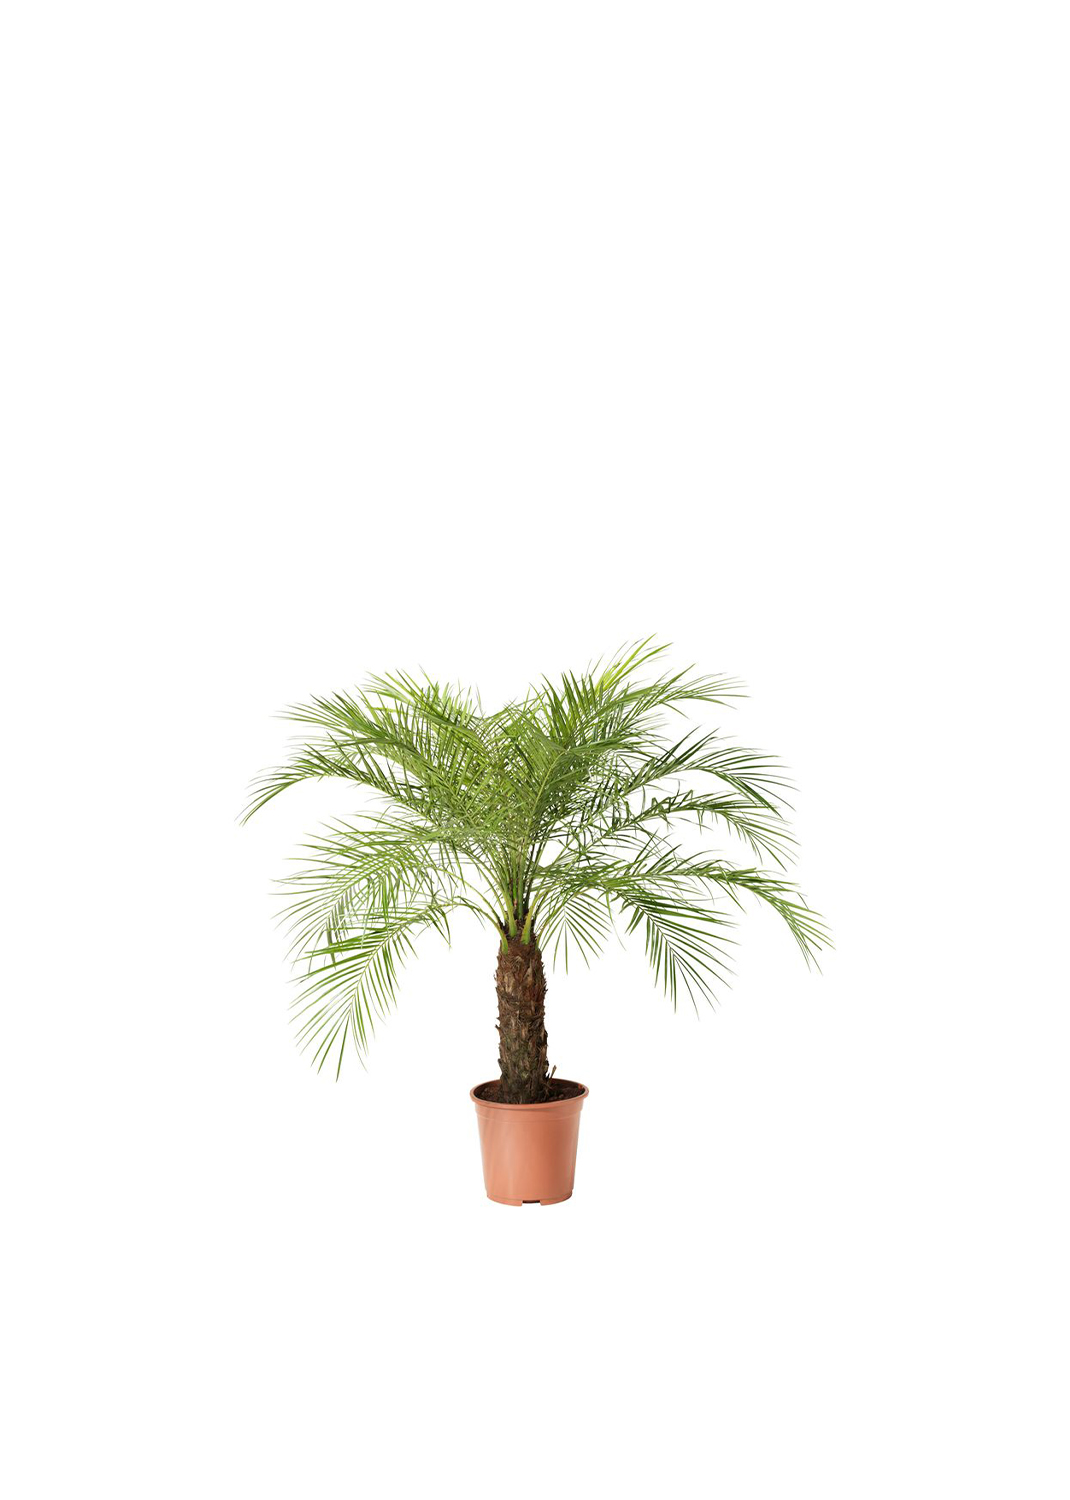 Phoenix Roebelenii, Miniature Date Palm, Dwarf Pygmy Date palm